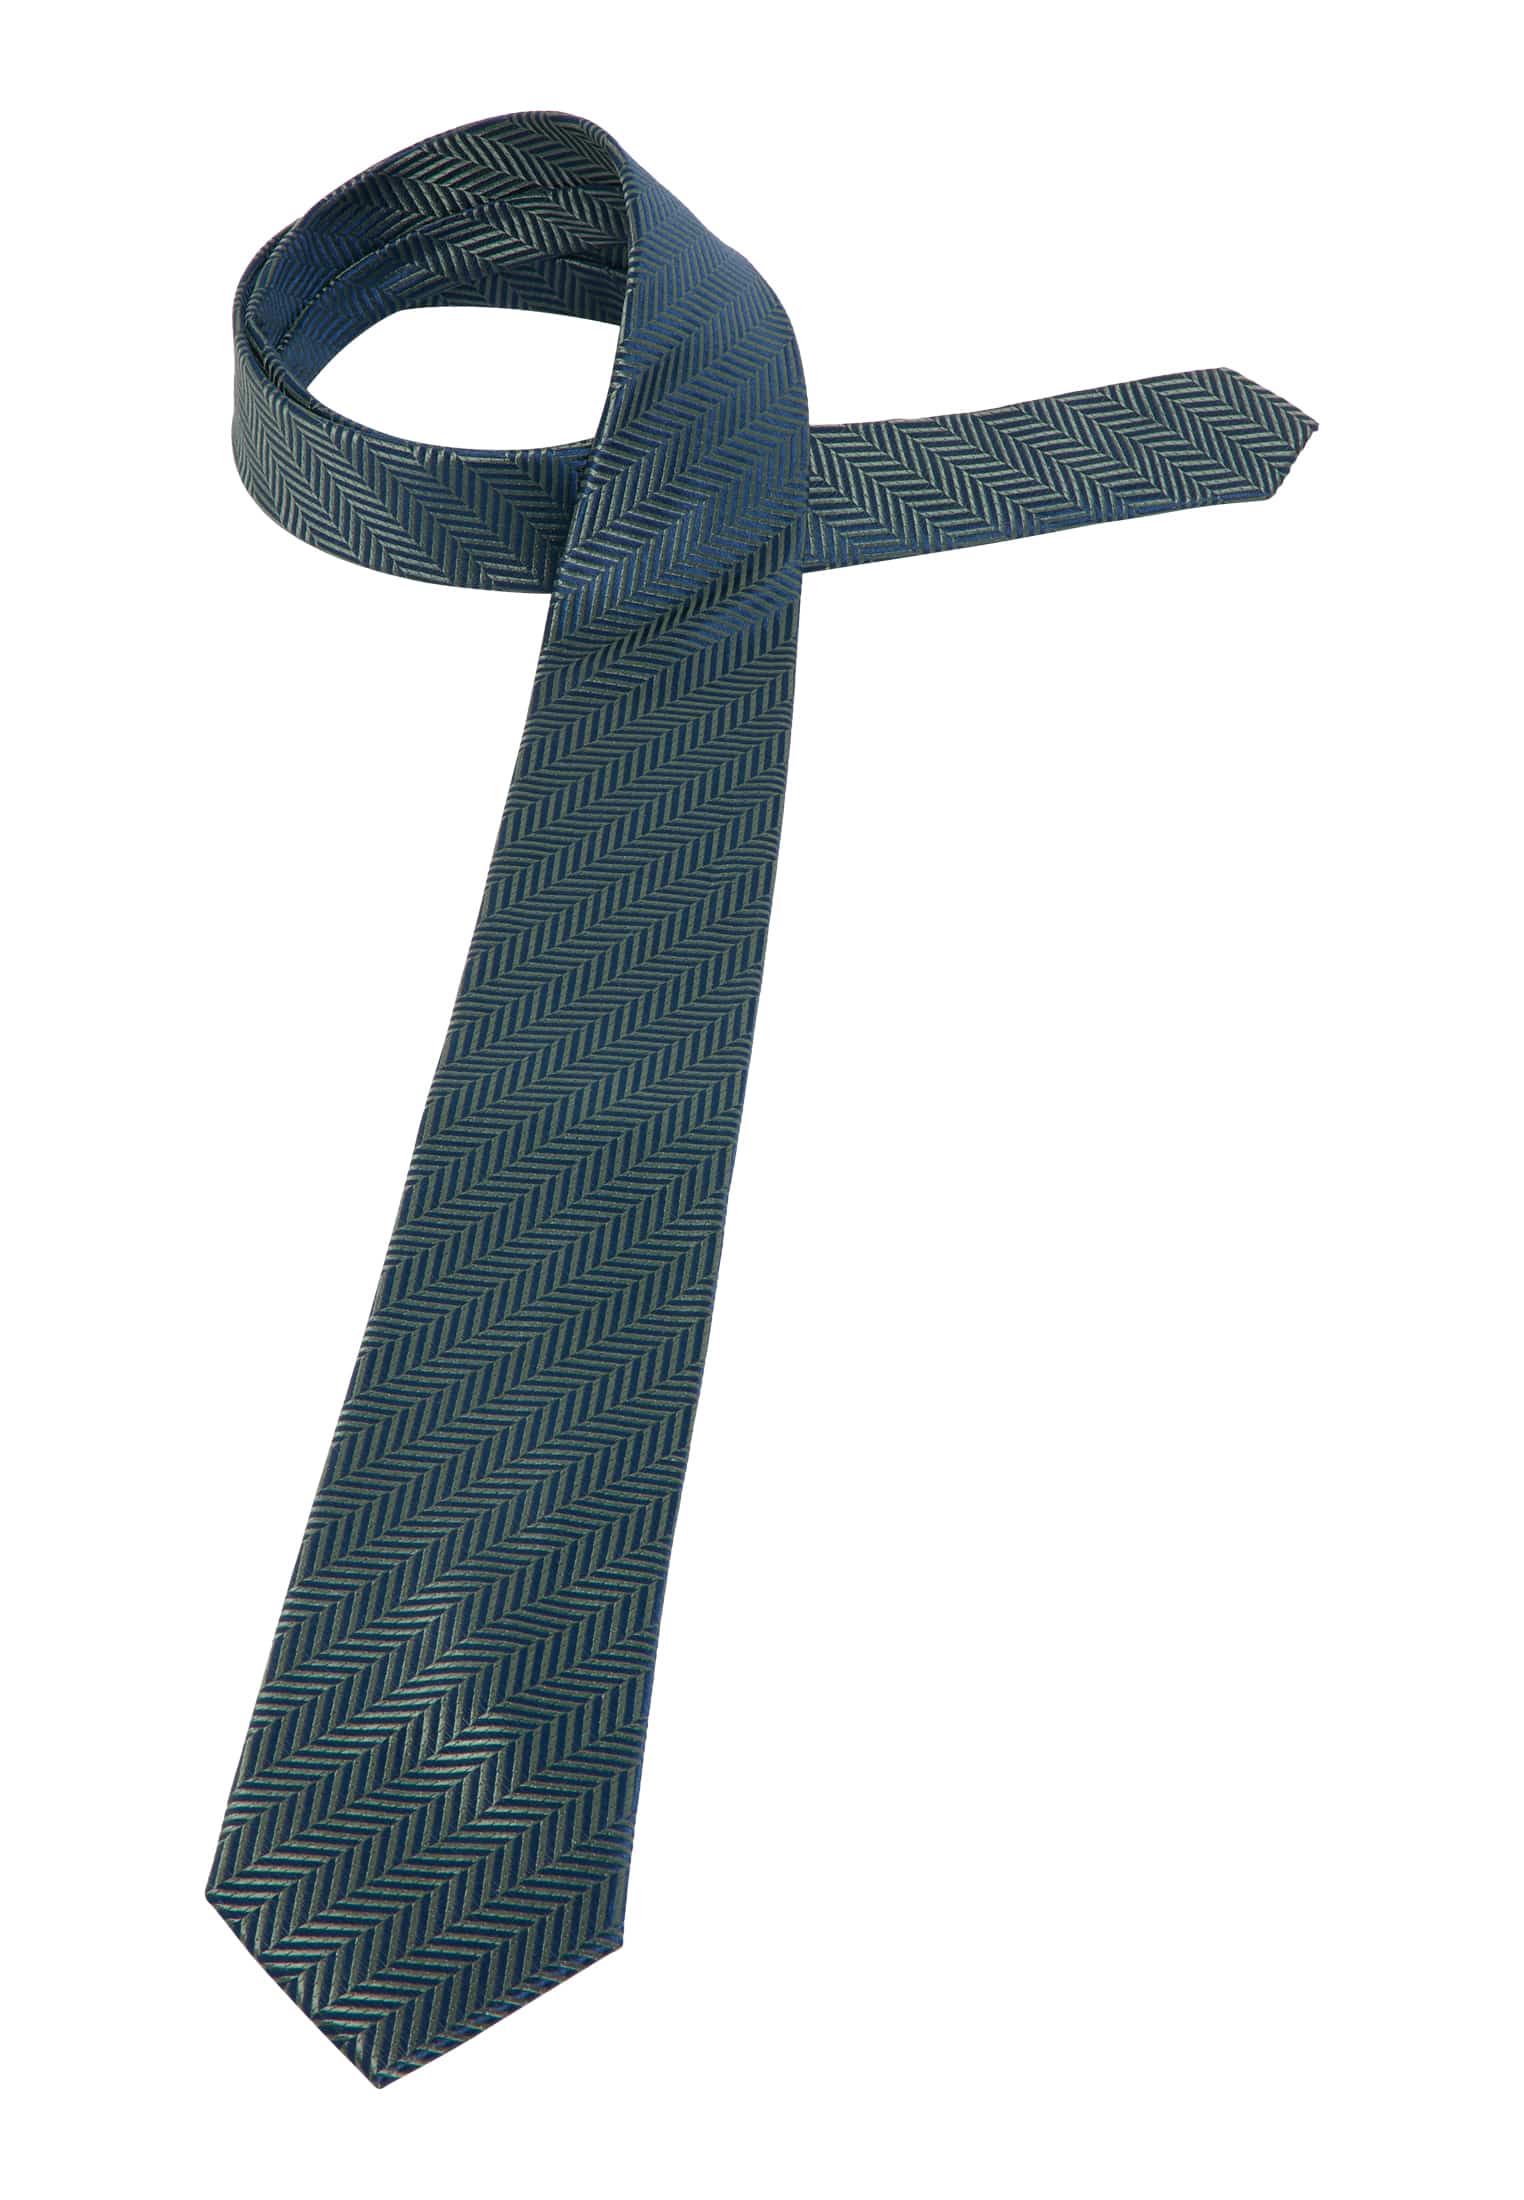 Krawatte in grün | gemustert 142 1AC01911-04-01-142 grün | 